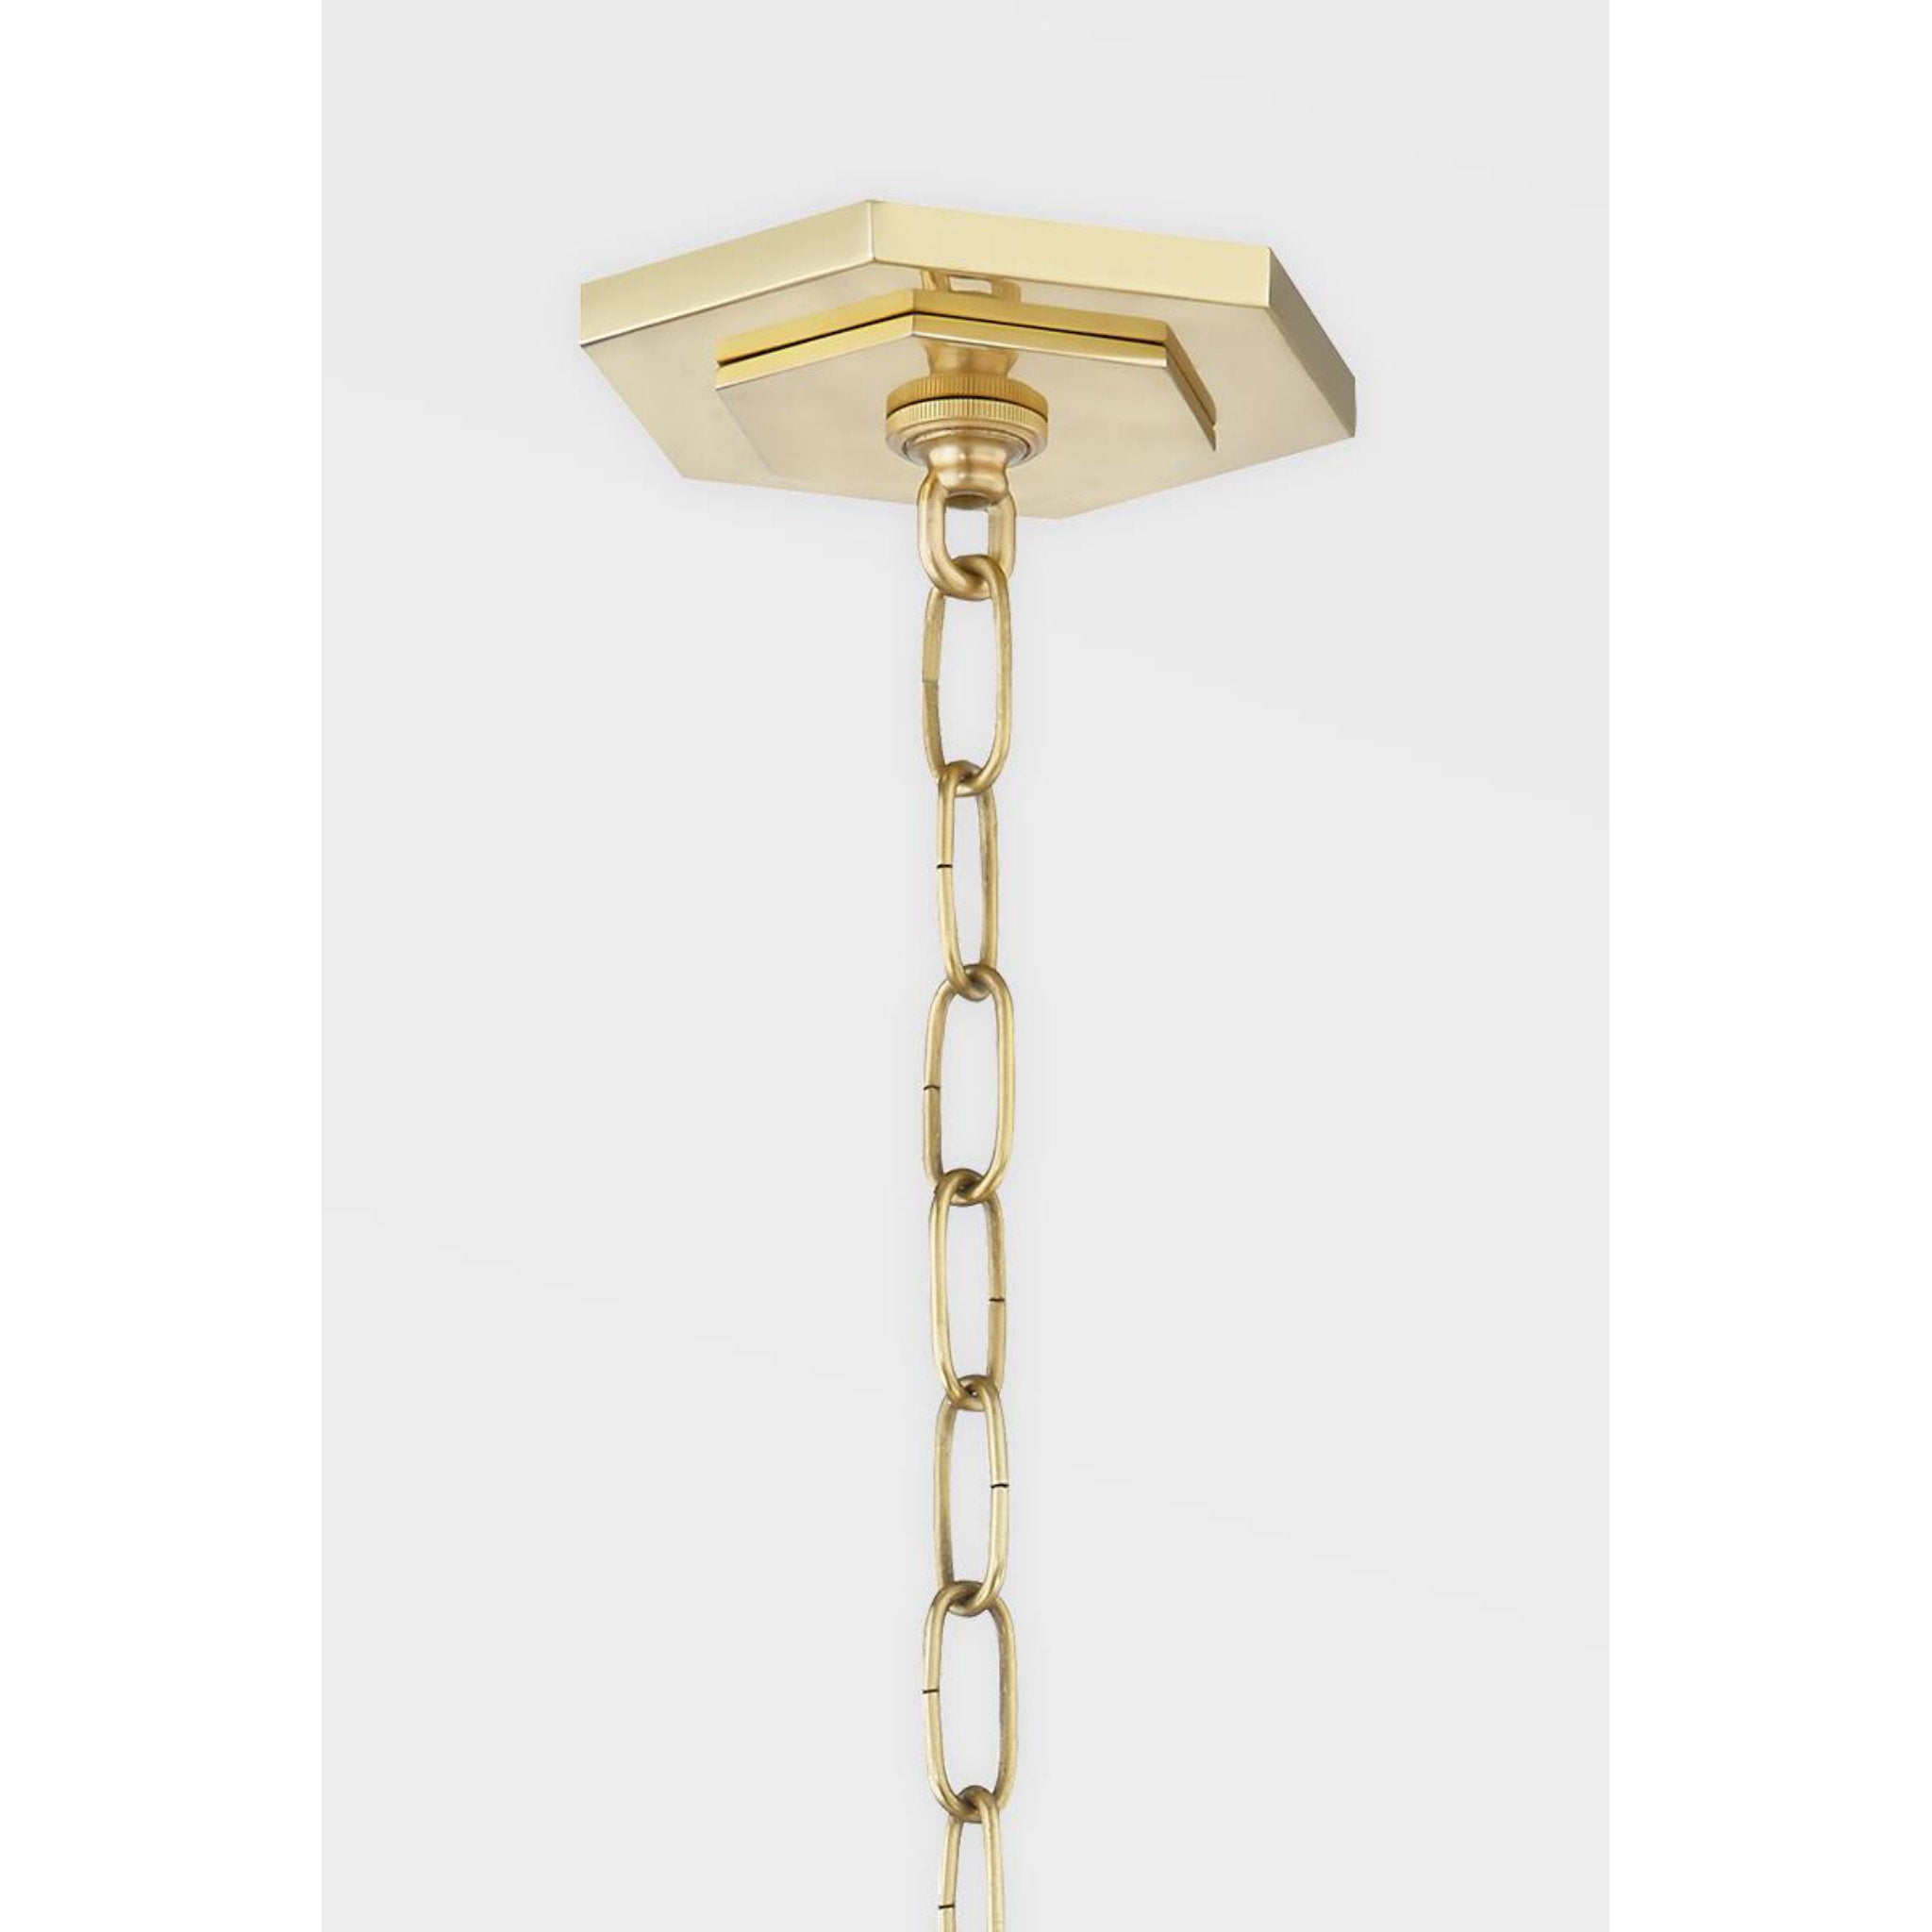 Flatbush 6 Light Lantern in Aged Brass